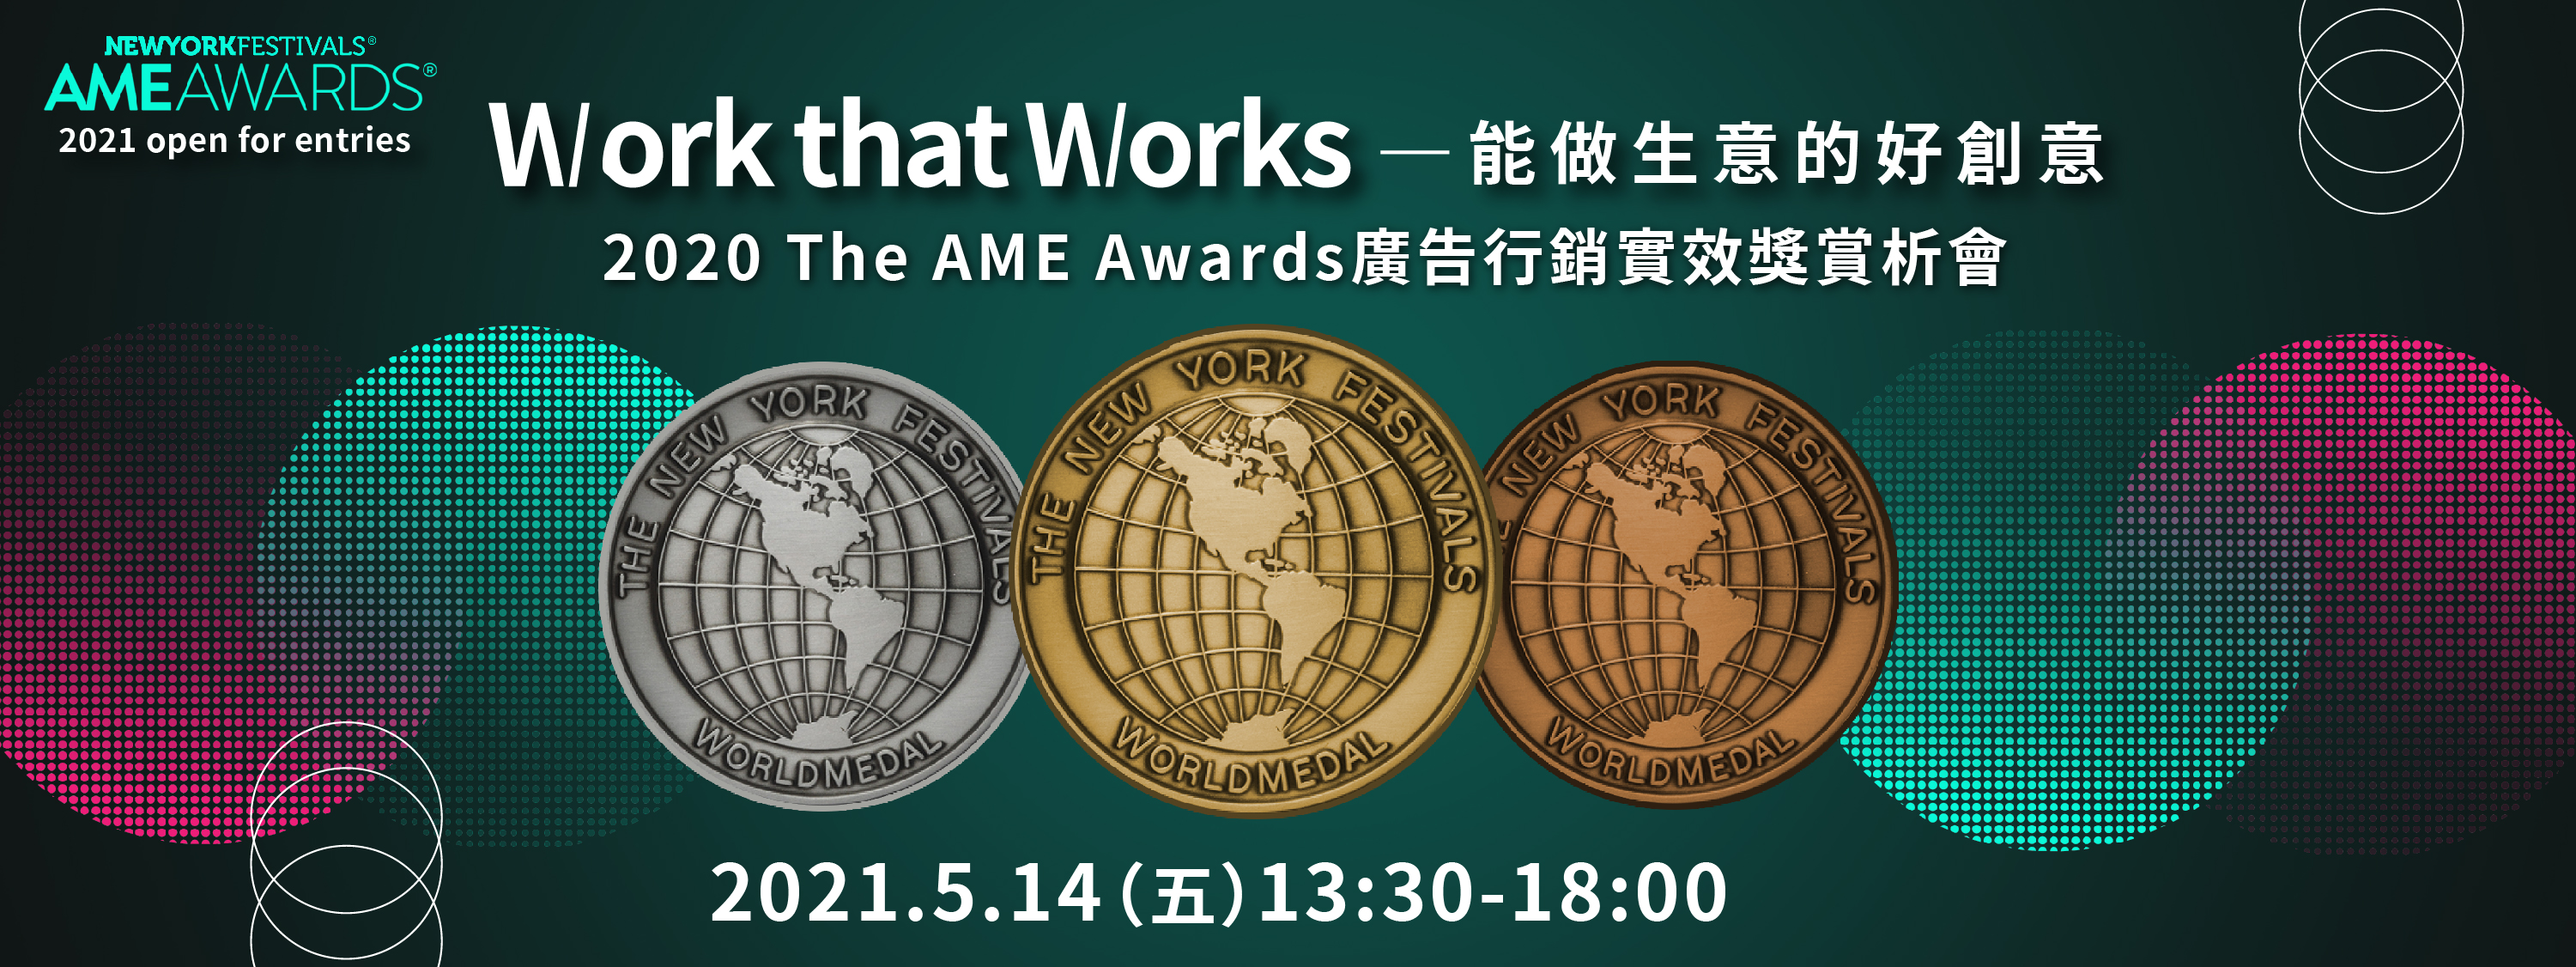 Work that Works 能做生意的好創意 - 2020 The AME Awards廣告行銷實效獎賞析會